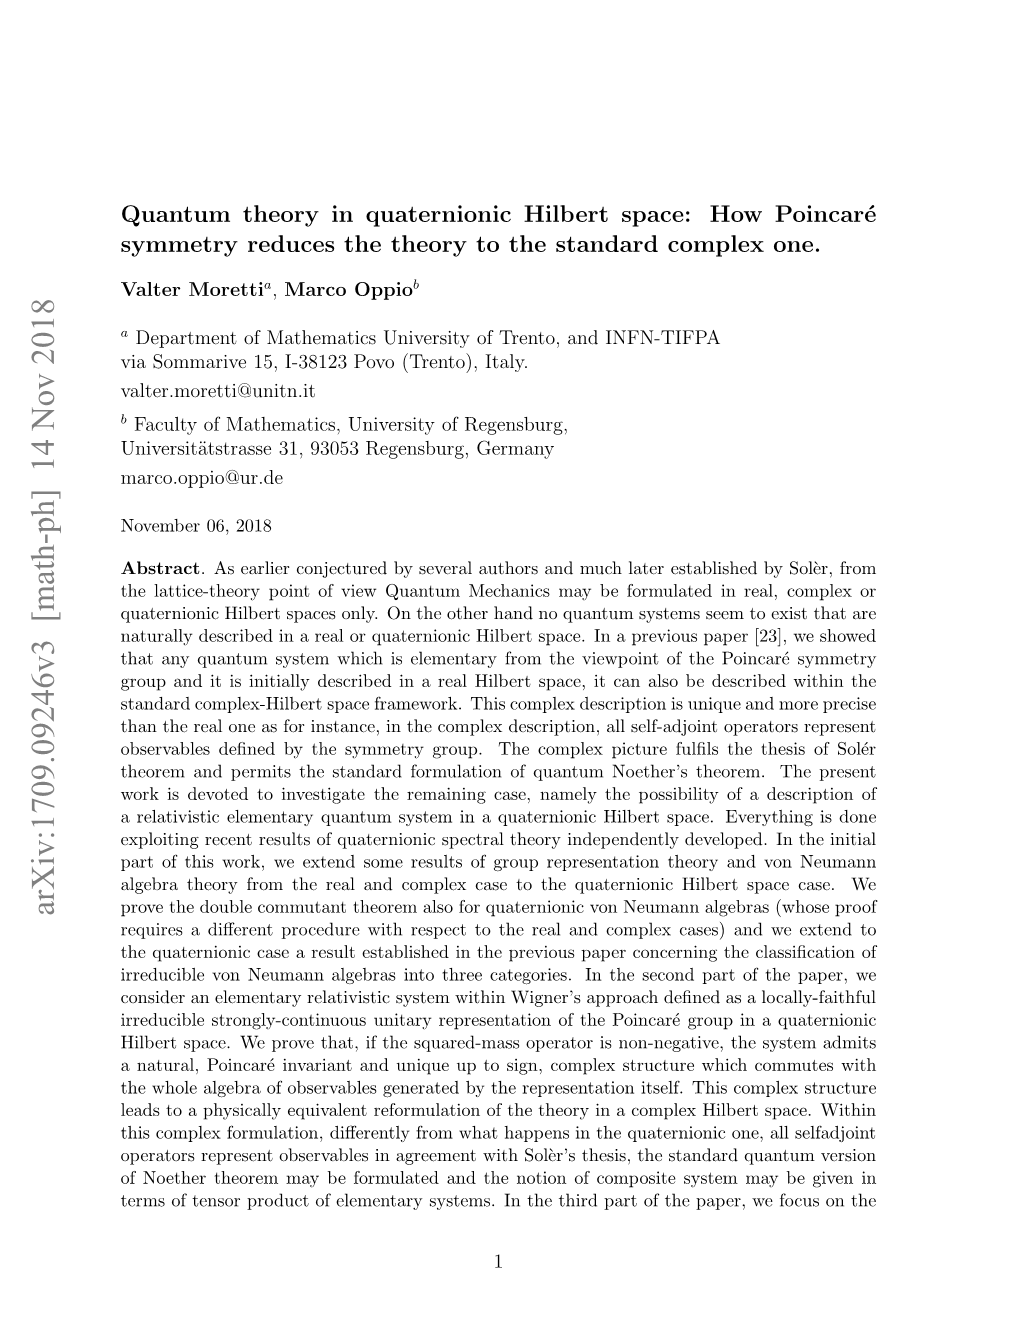 Quantum Theory in Quaternionic Hilbert Space: How Poincar\'E